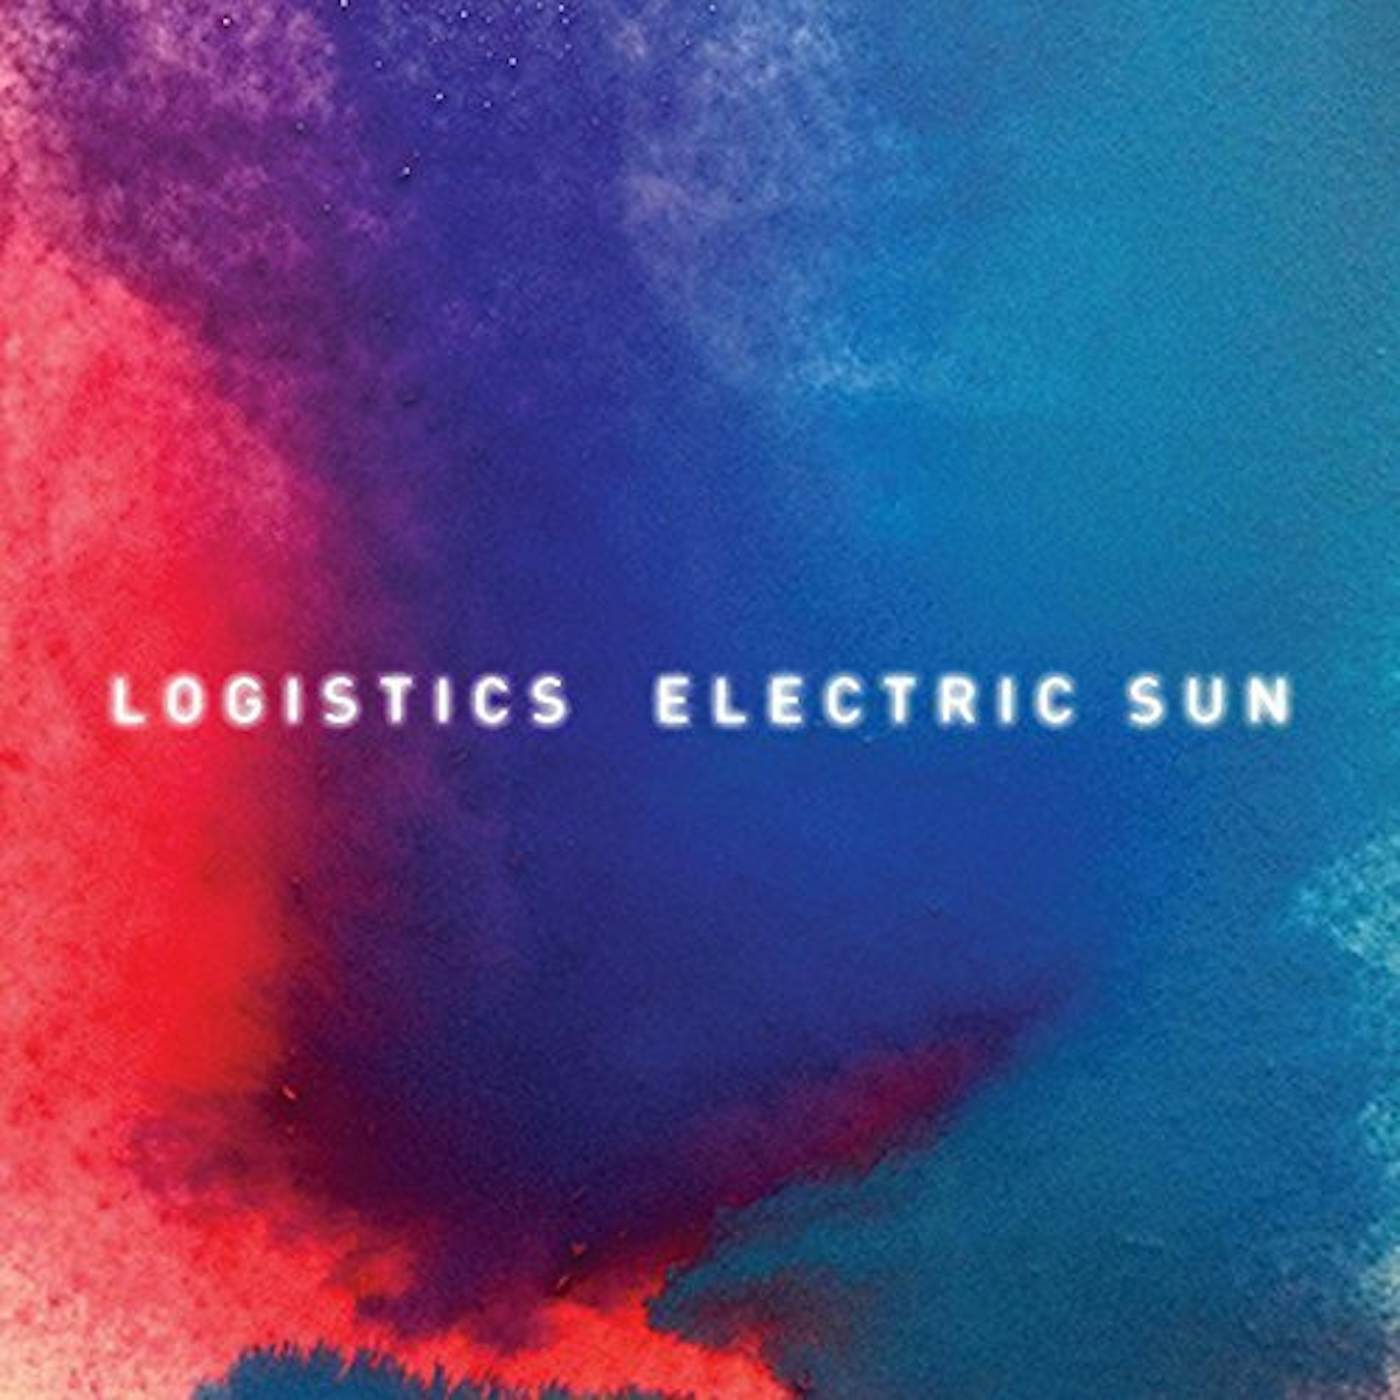 Logistics Electric Sun Vinyl Record